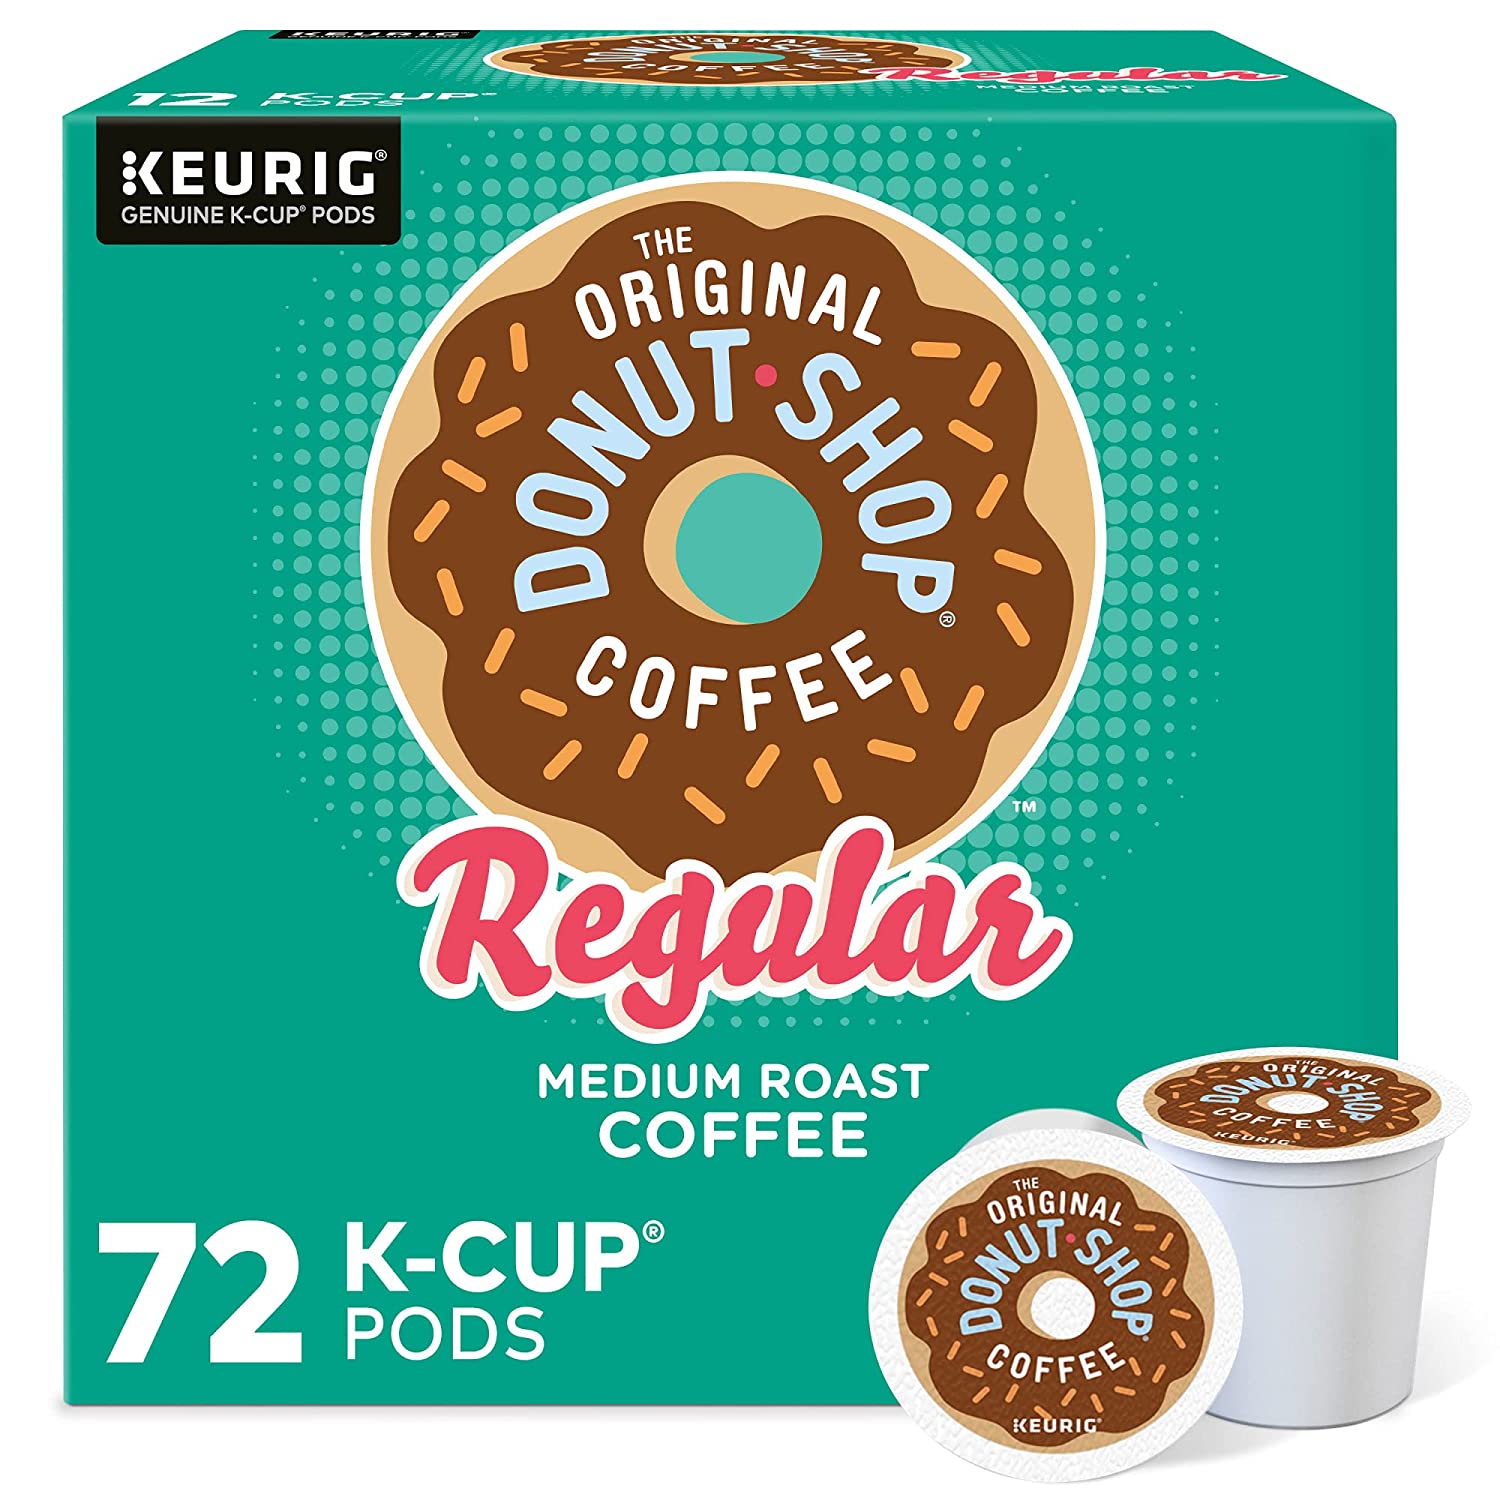 The Original Donut Shop Certified Kosher Medium Roast K -Cup, 72-Count